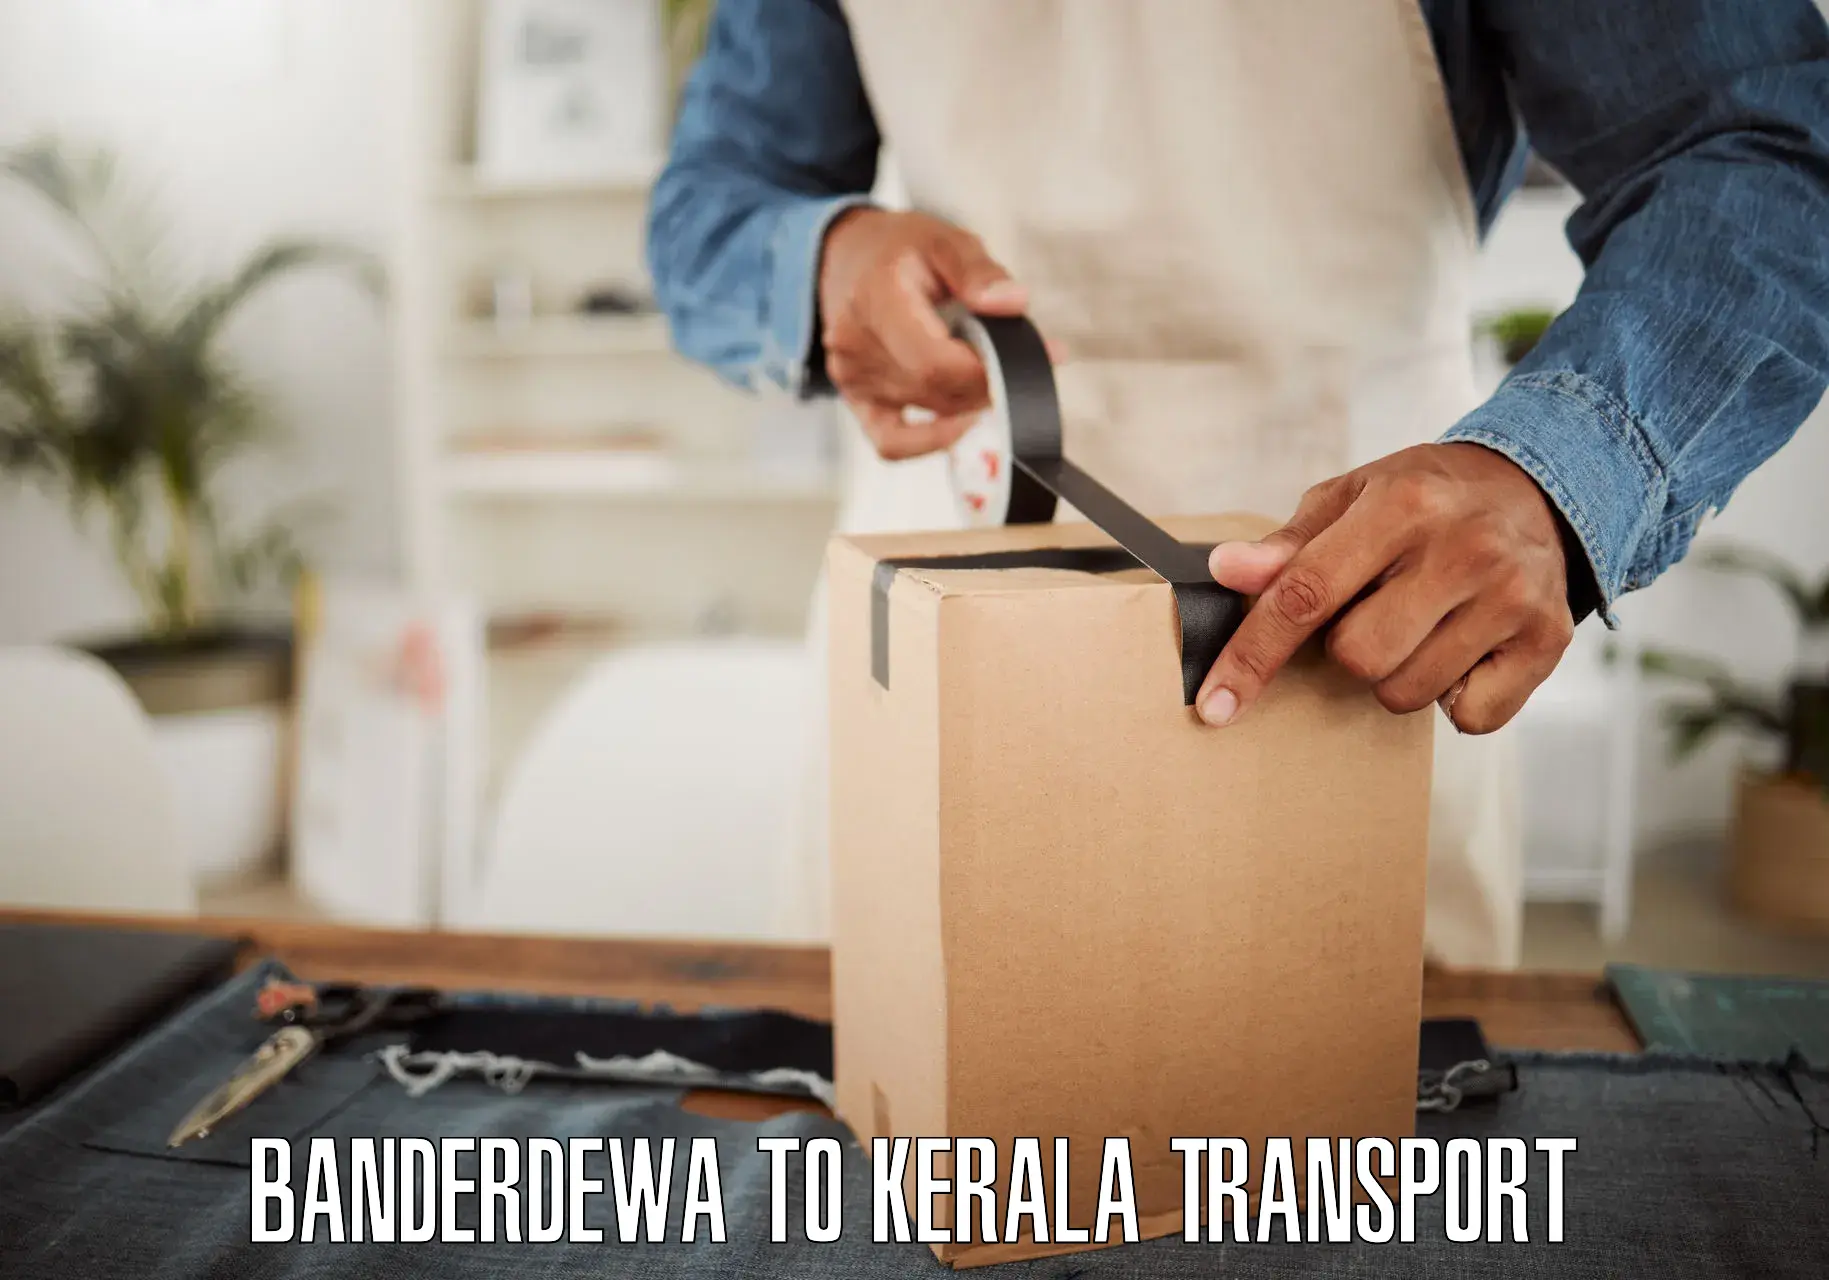 Transport in sharing Banderdewa to Kuthiathode